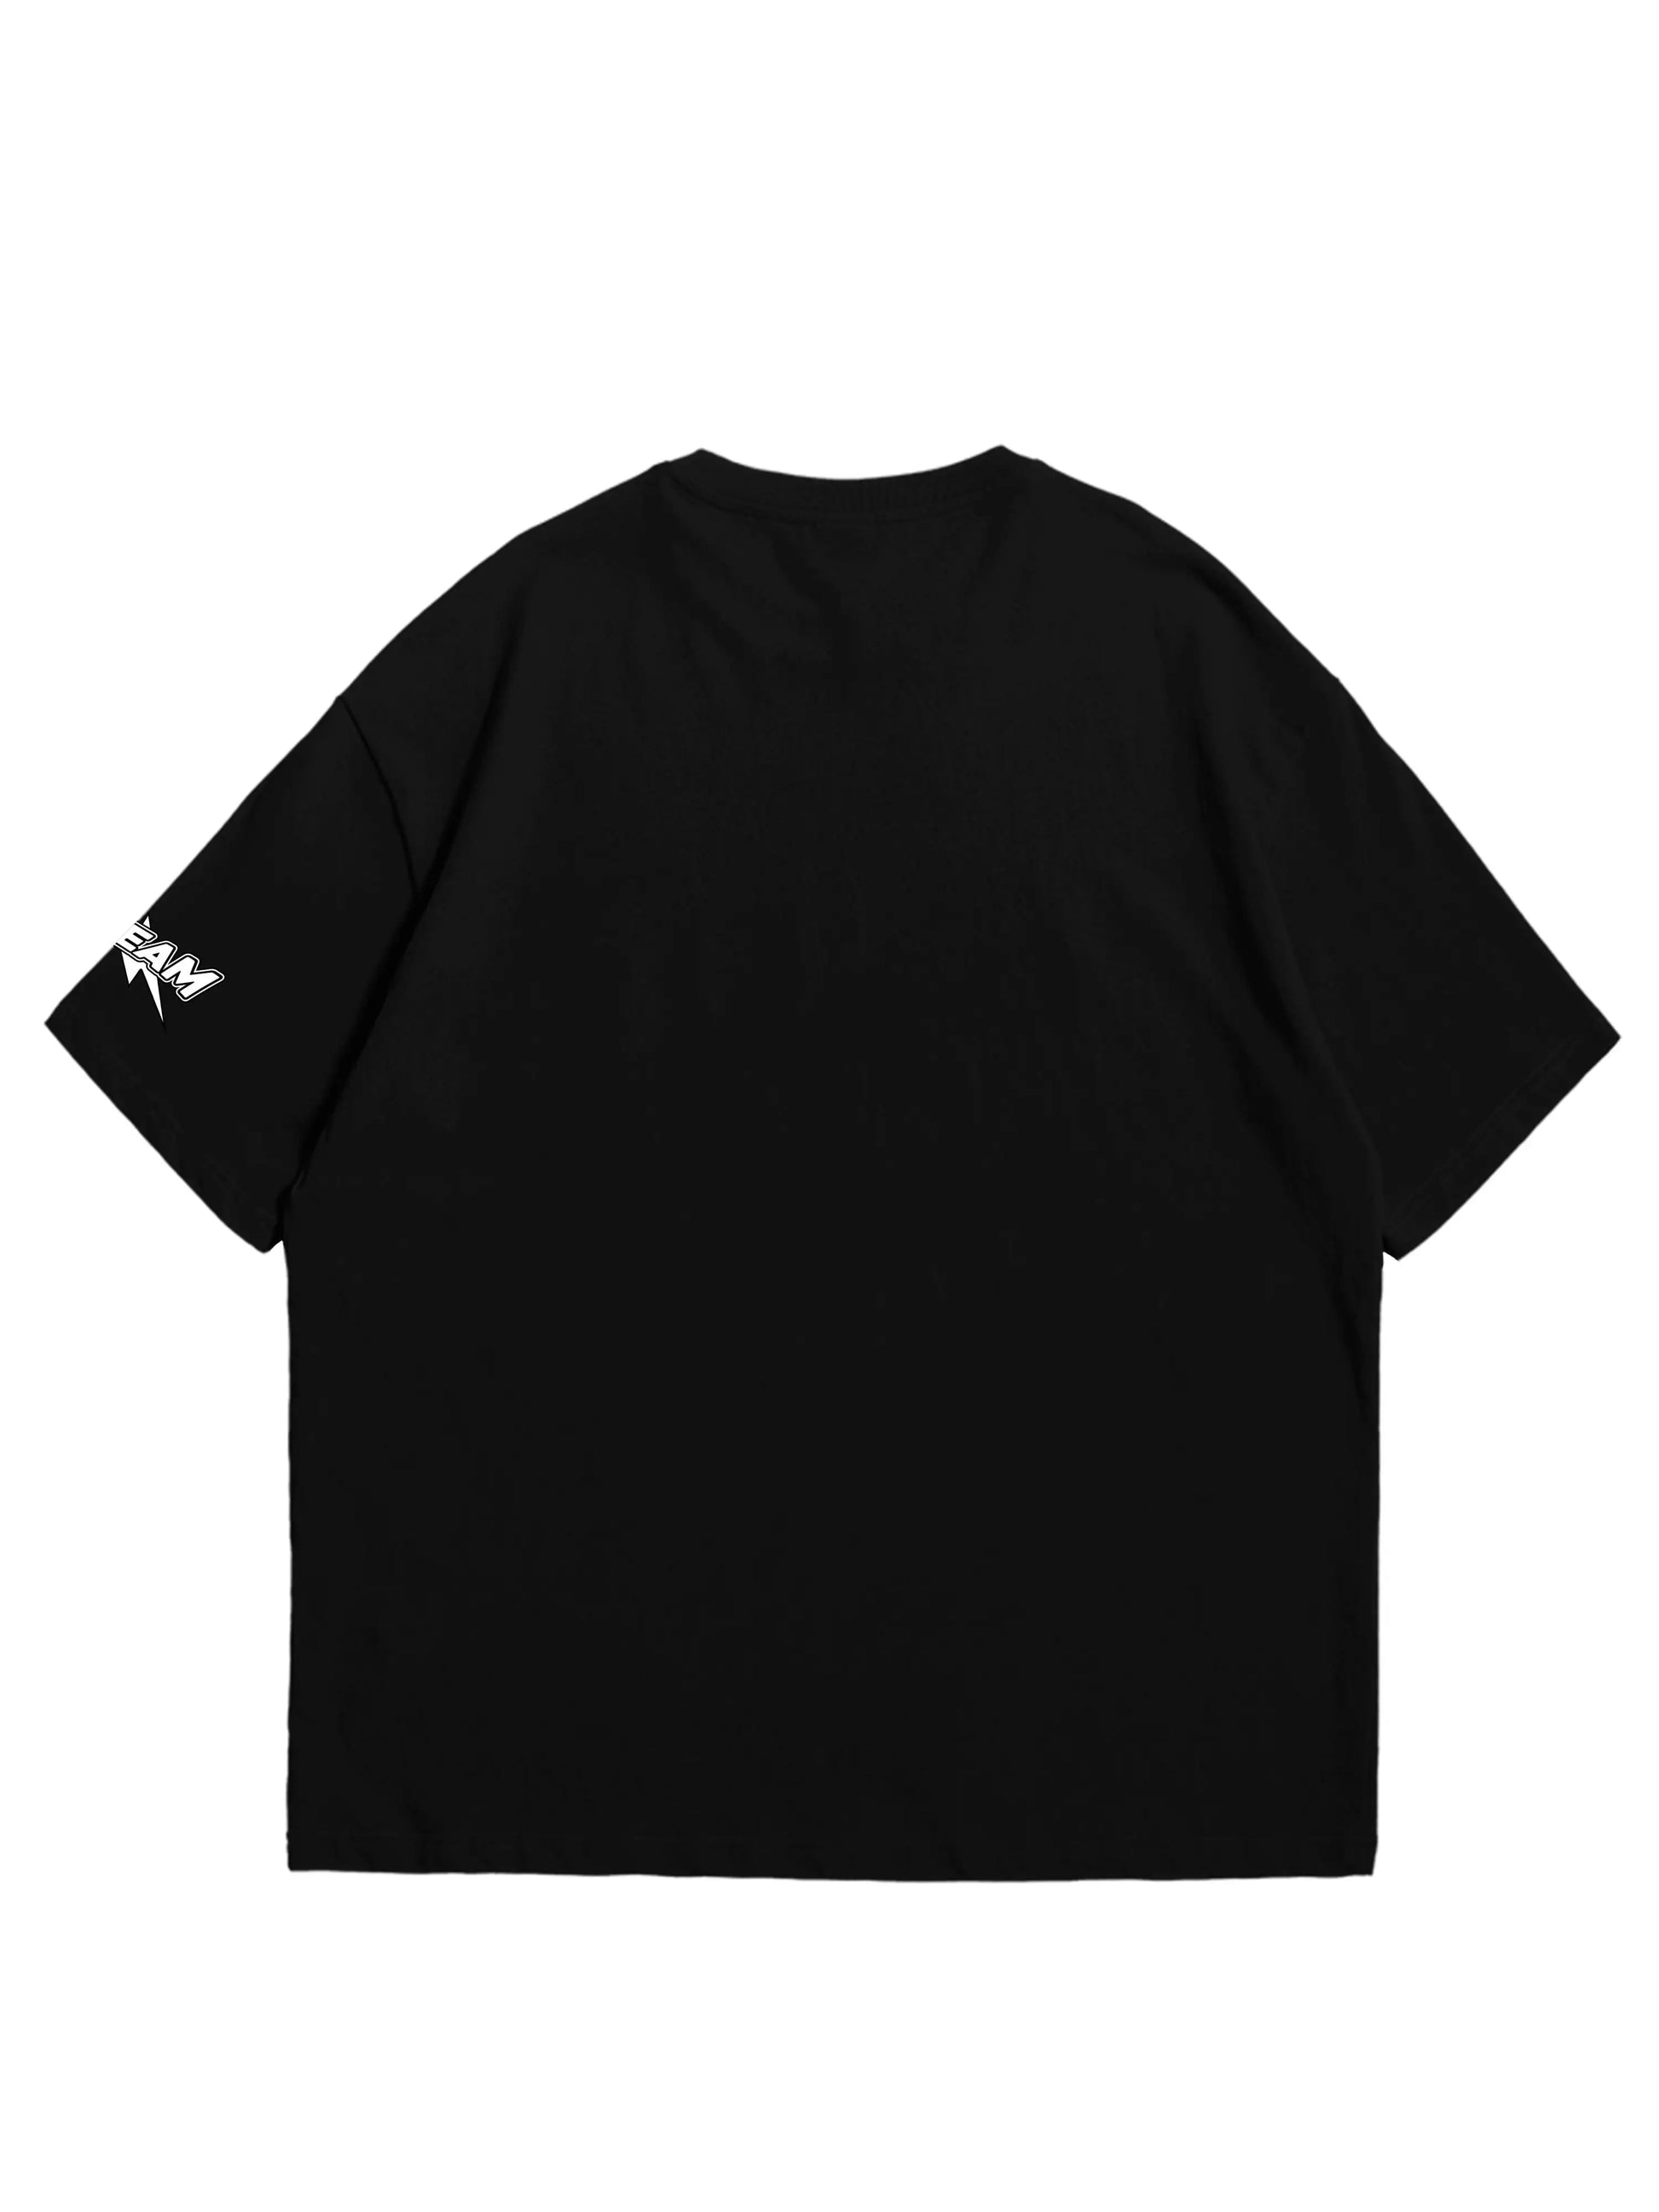 Black oversized T-shirt, intergalactic warrior y2k print, skream streetwear t-shirt 